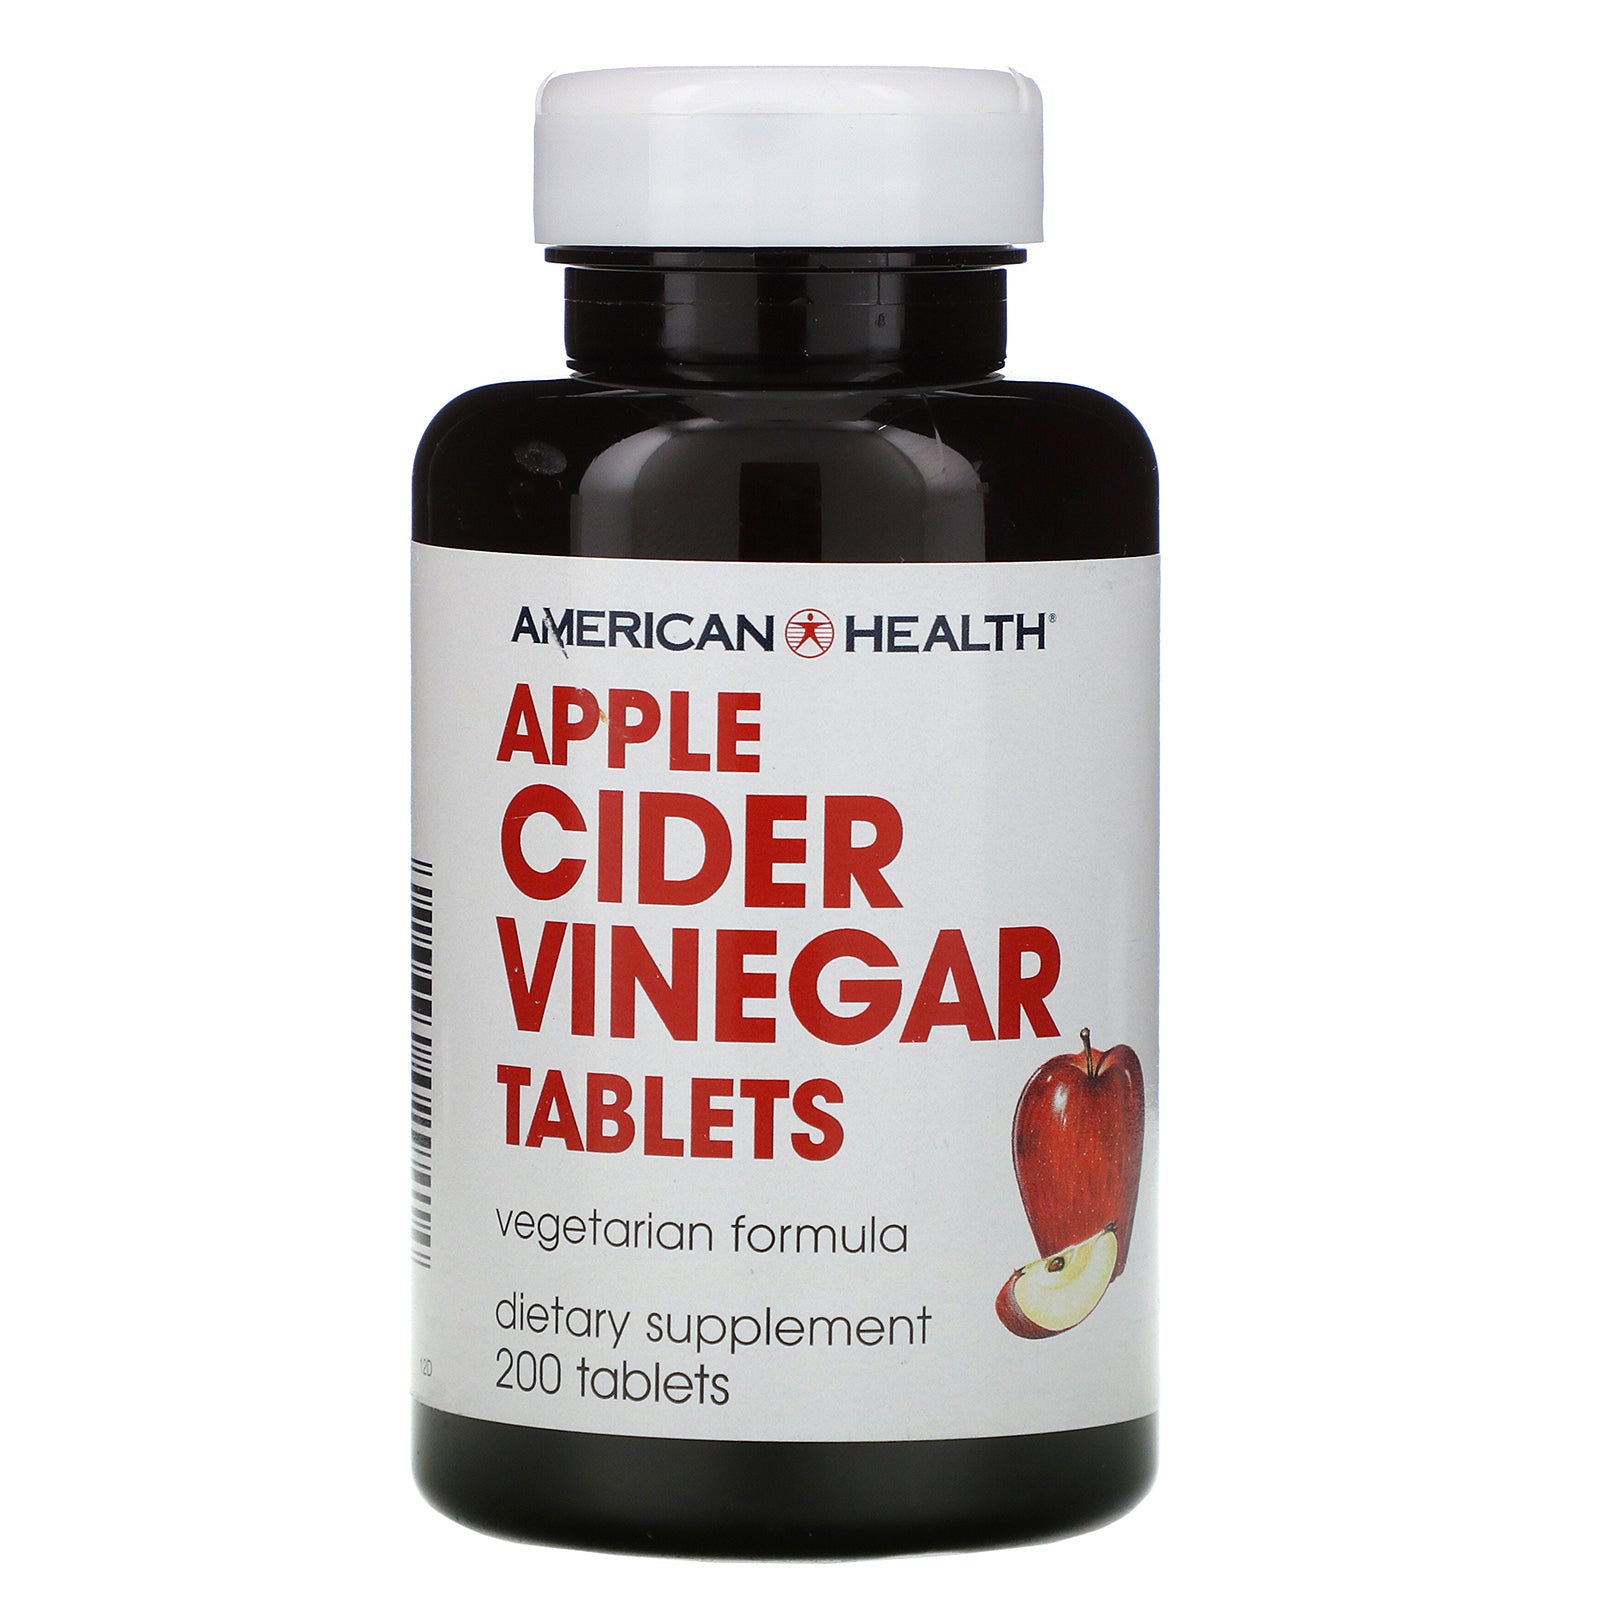 American Health, Apple Cider Vinegar Tablets